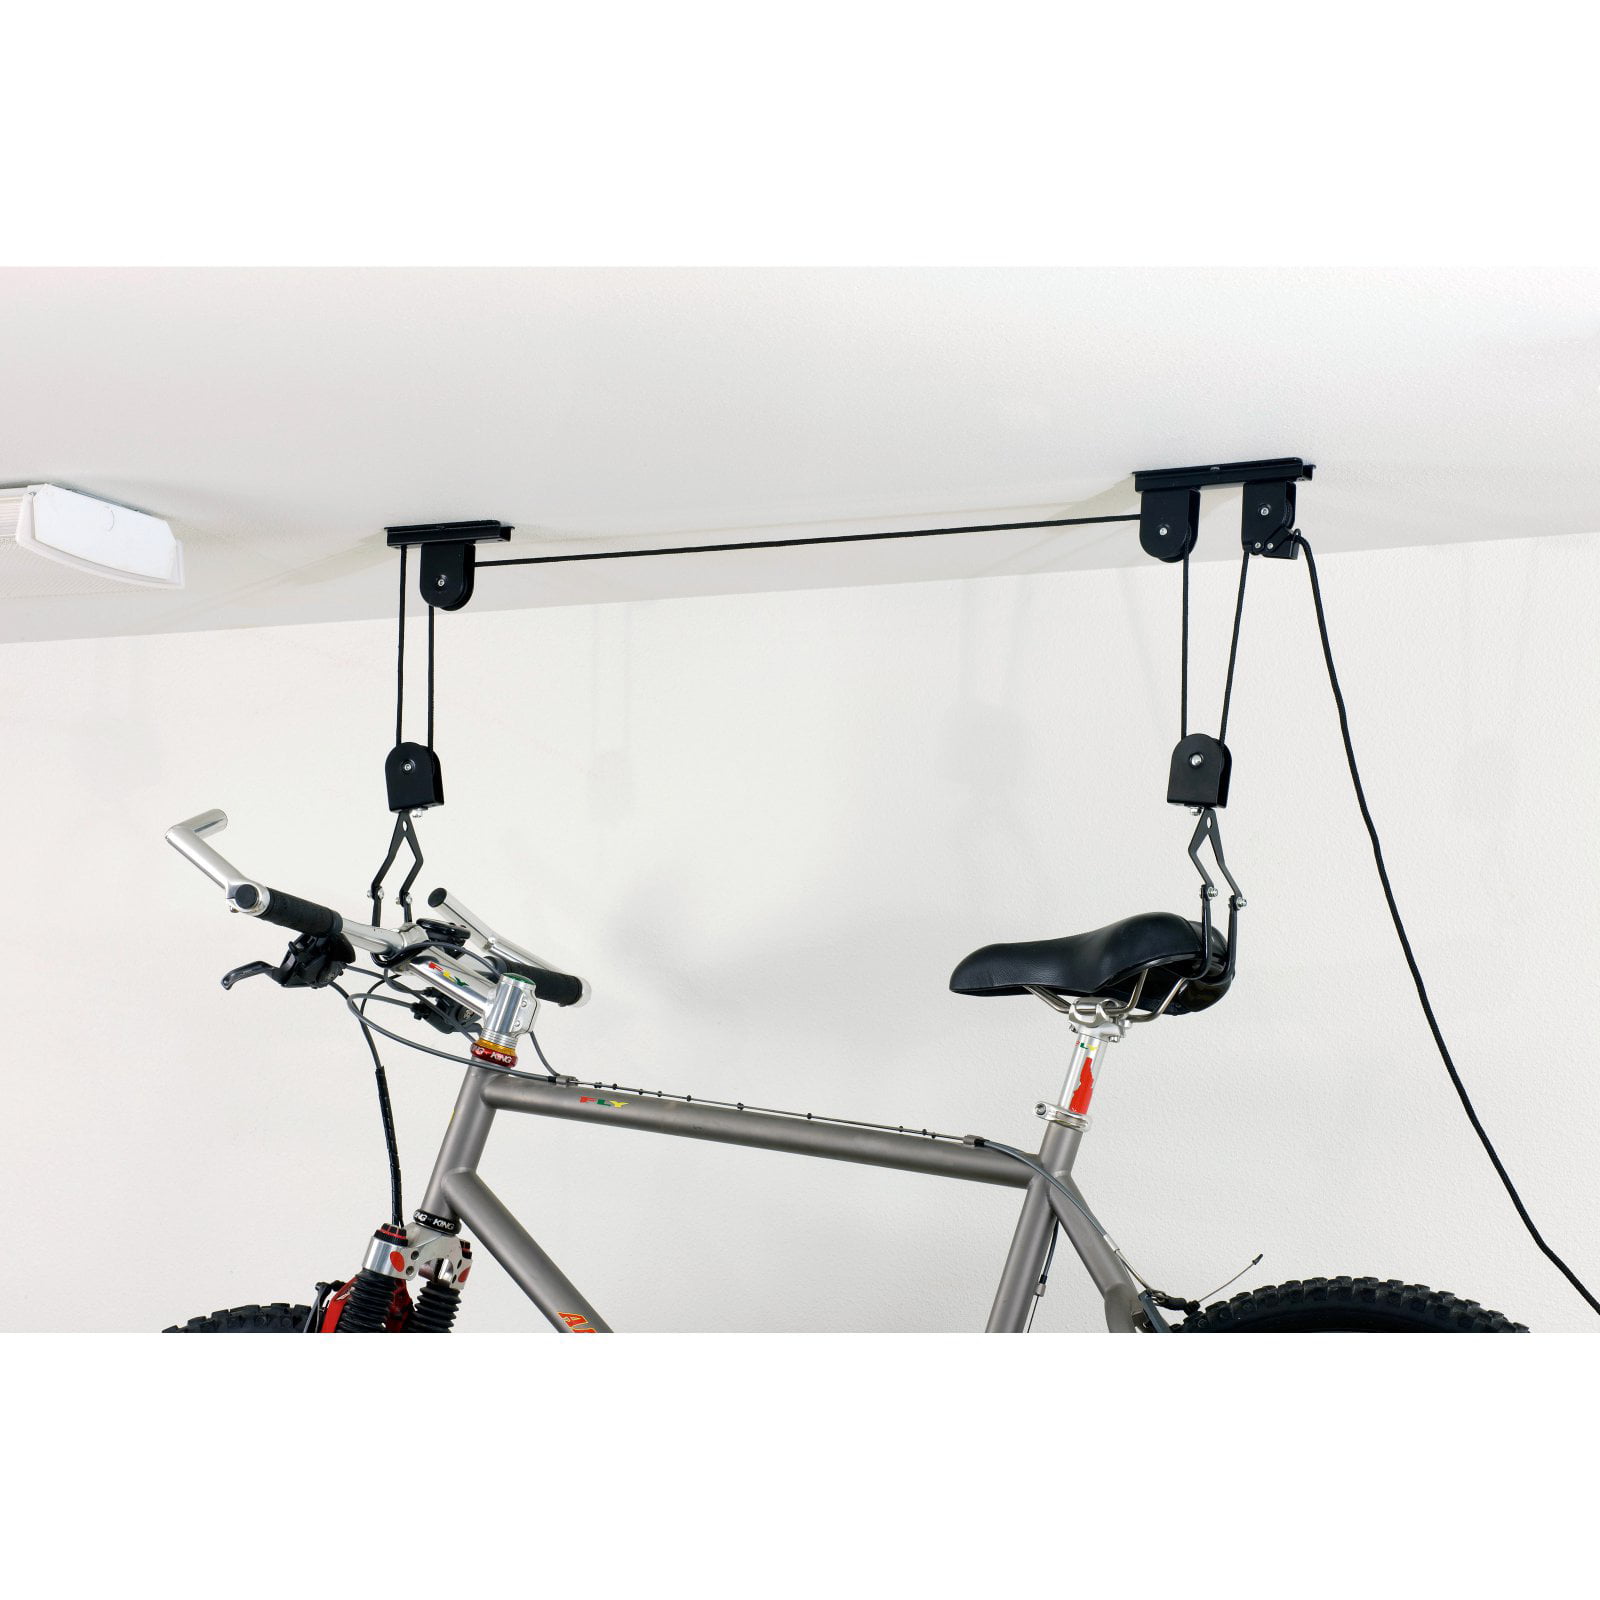 Racor PBH-1R Ceiling-Mounted Bike Lift Black for sale online 